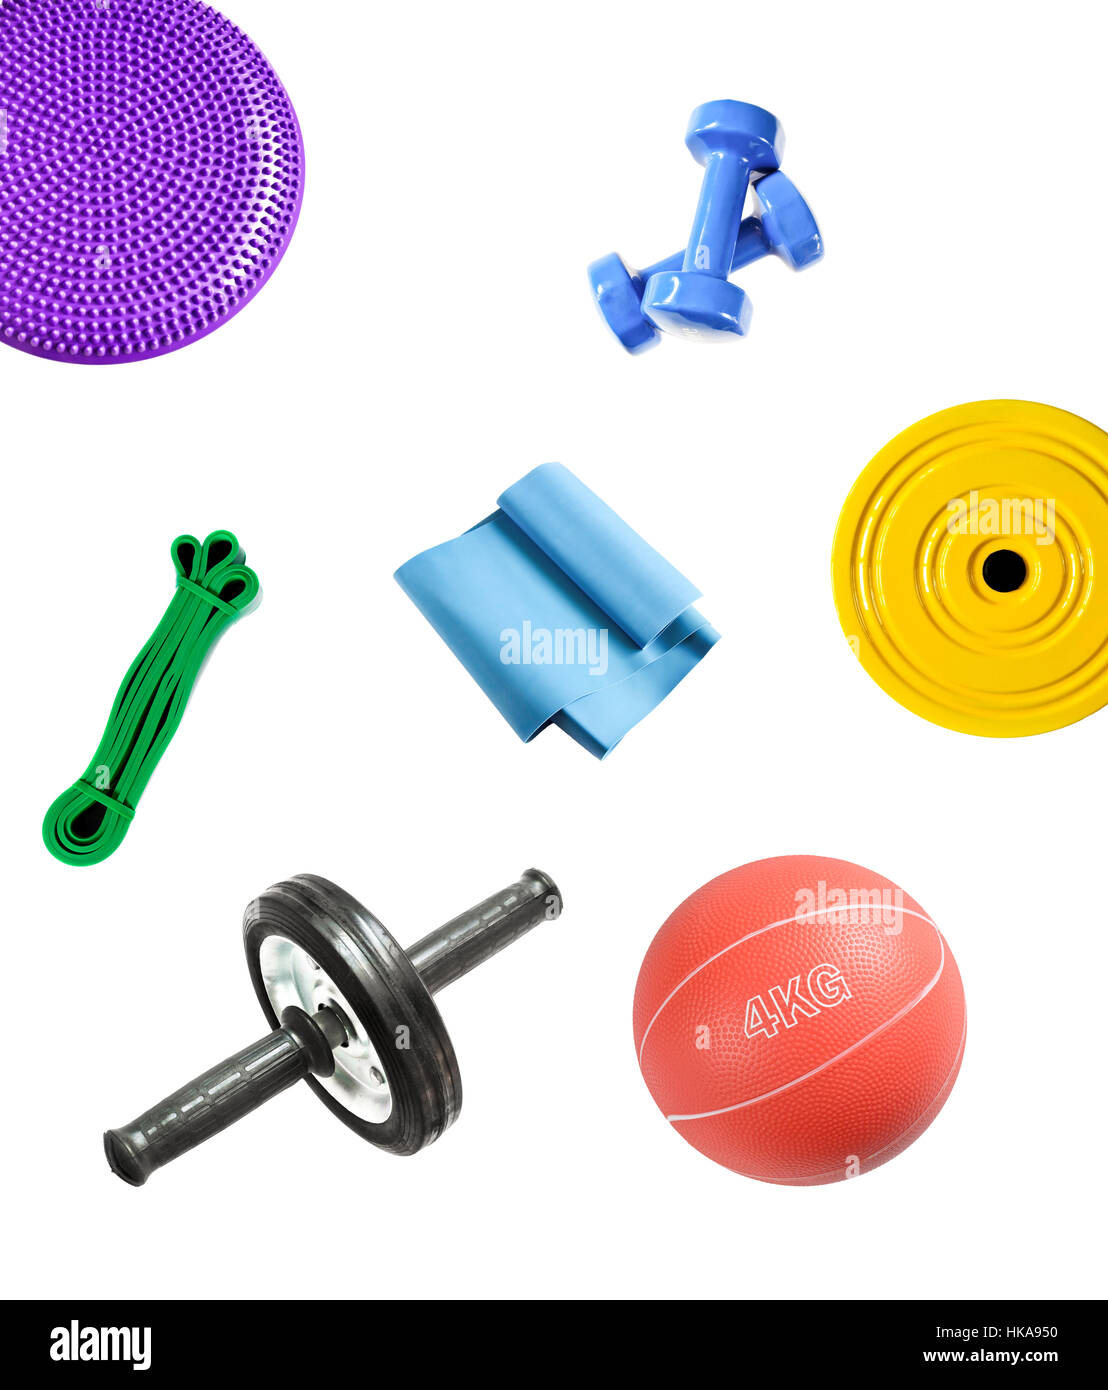 https://c8.alamy.com/comp/HKA950/set-of-sport-accessories-for-fitness-bodybuilding-and-rehabilitation-HKA950.jpg